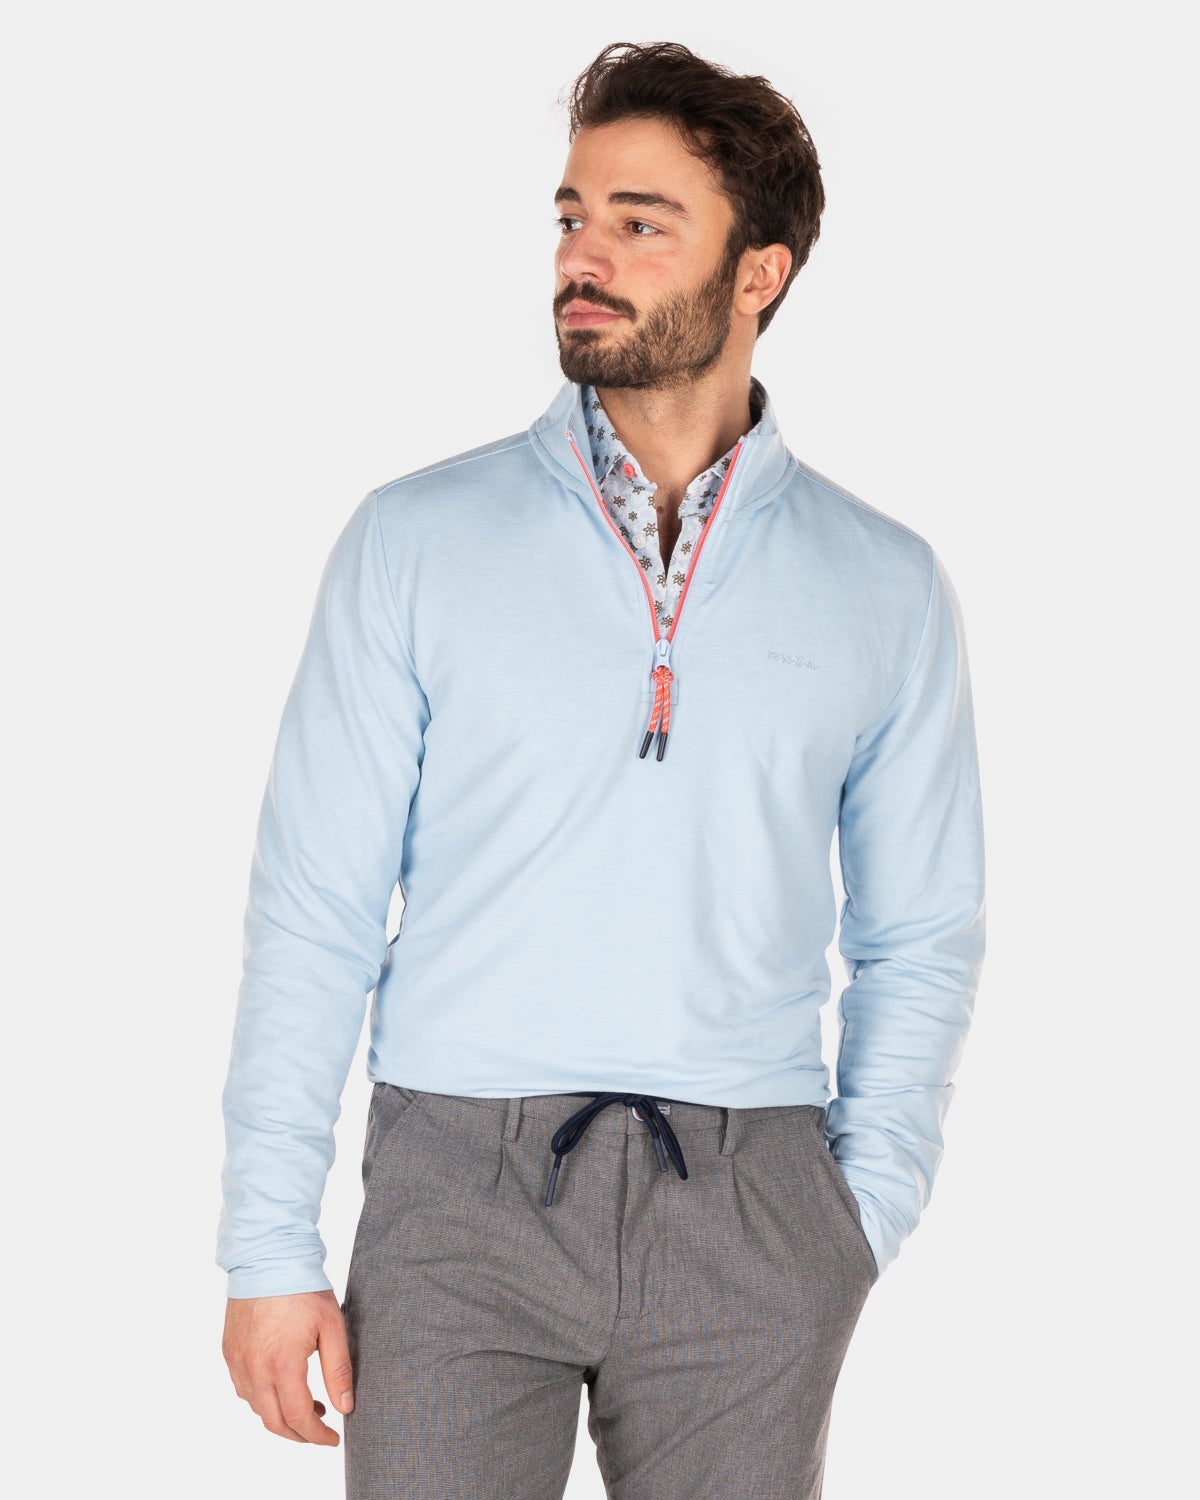 Half zip sweater - Universal Blue